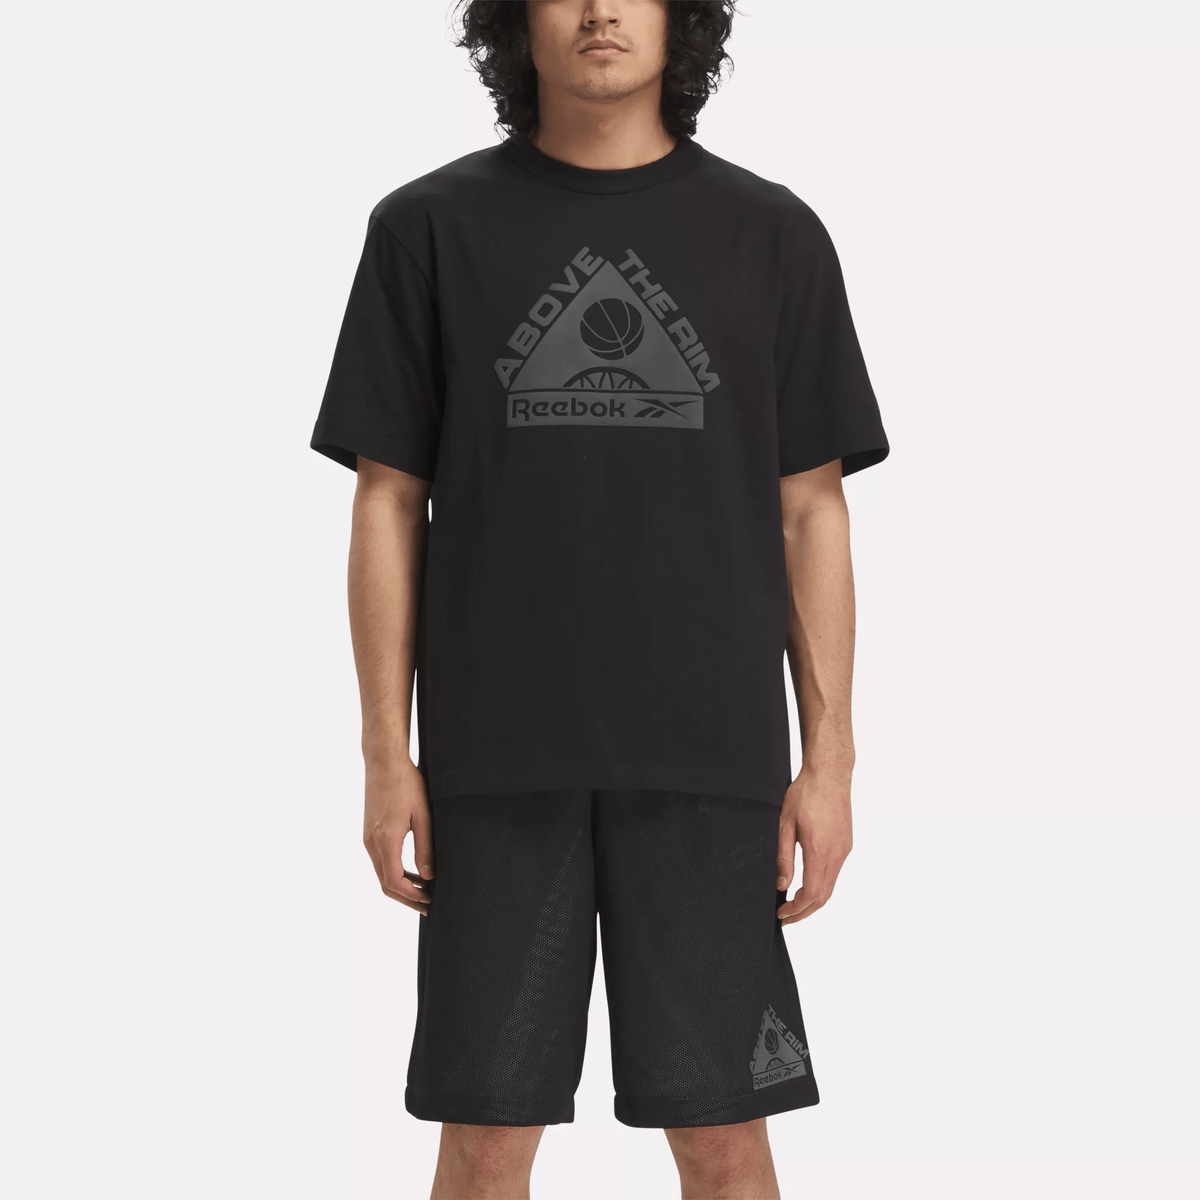 Reebok Men's Basketball Above the Rim Graphic T-Shirt Black